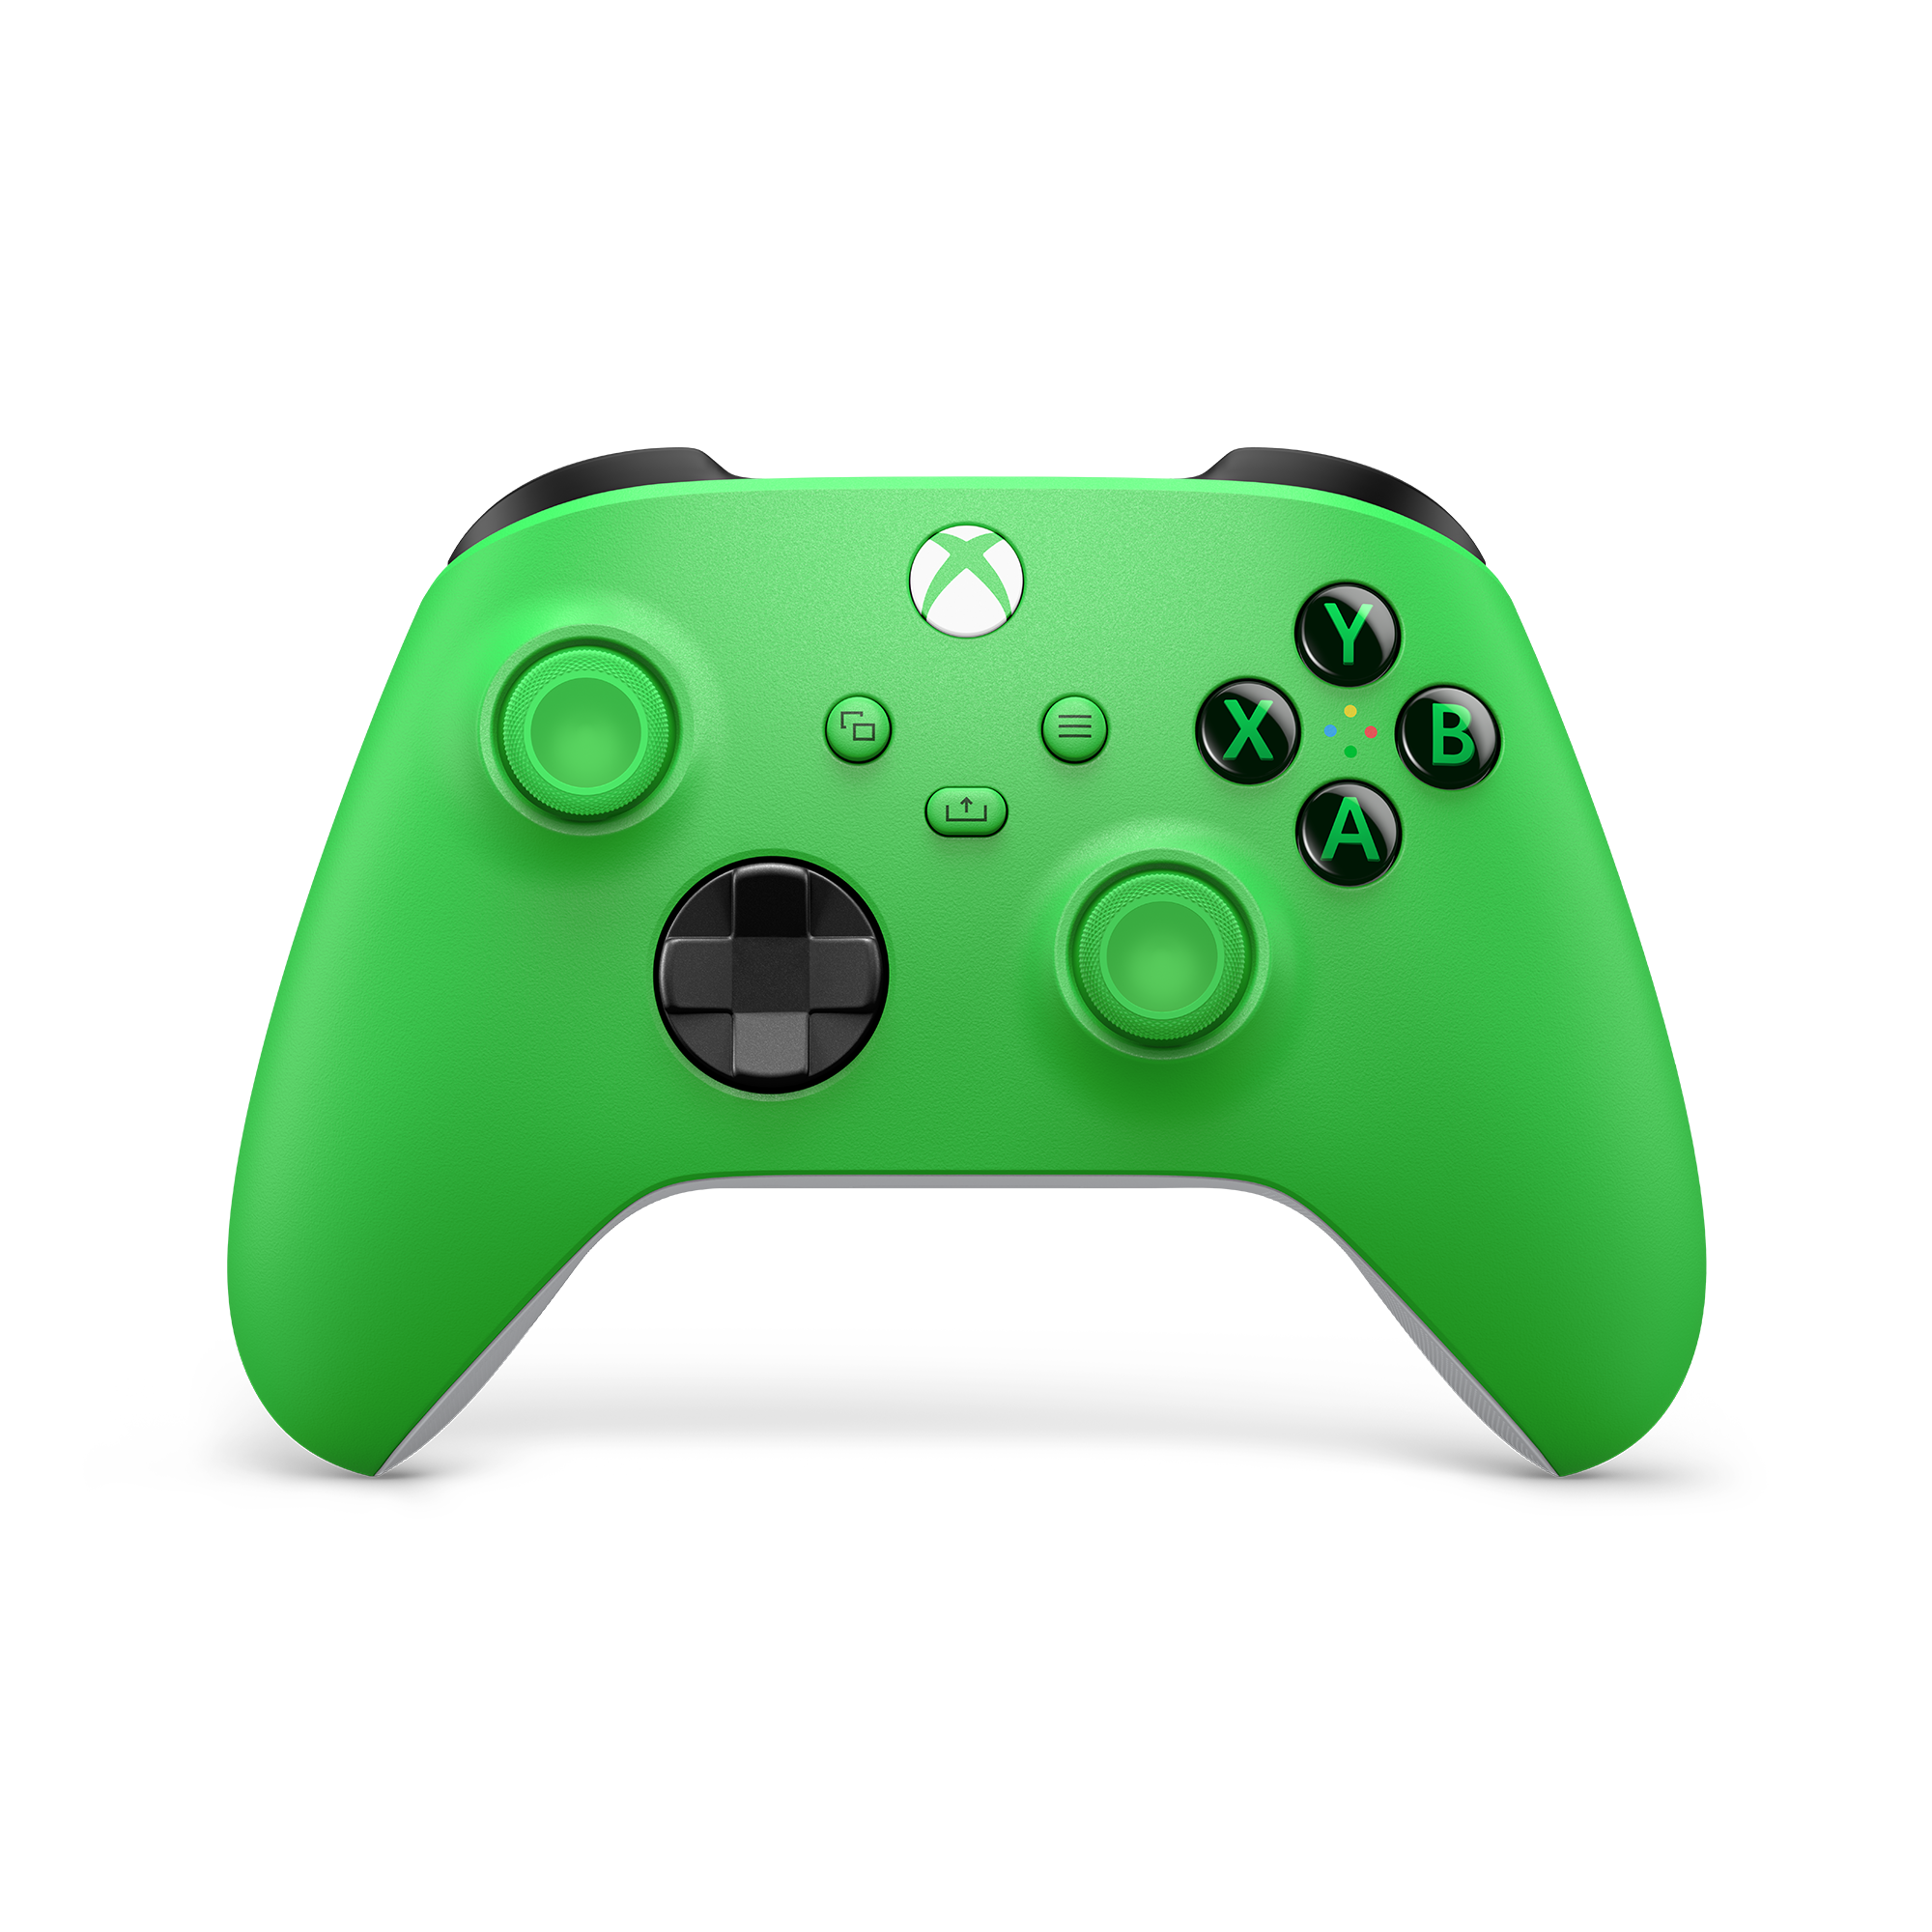 Xbox Wireless Controller – Velocity Green